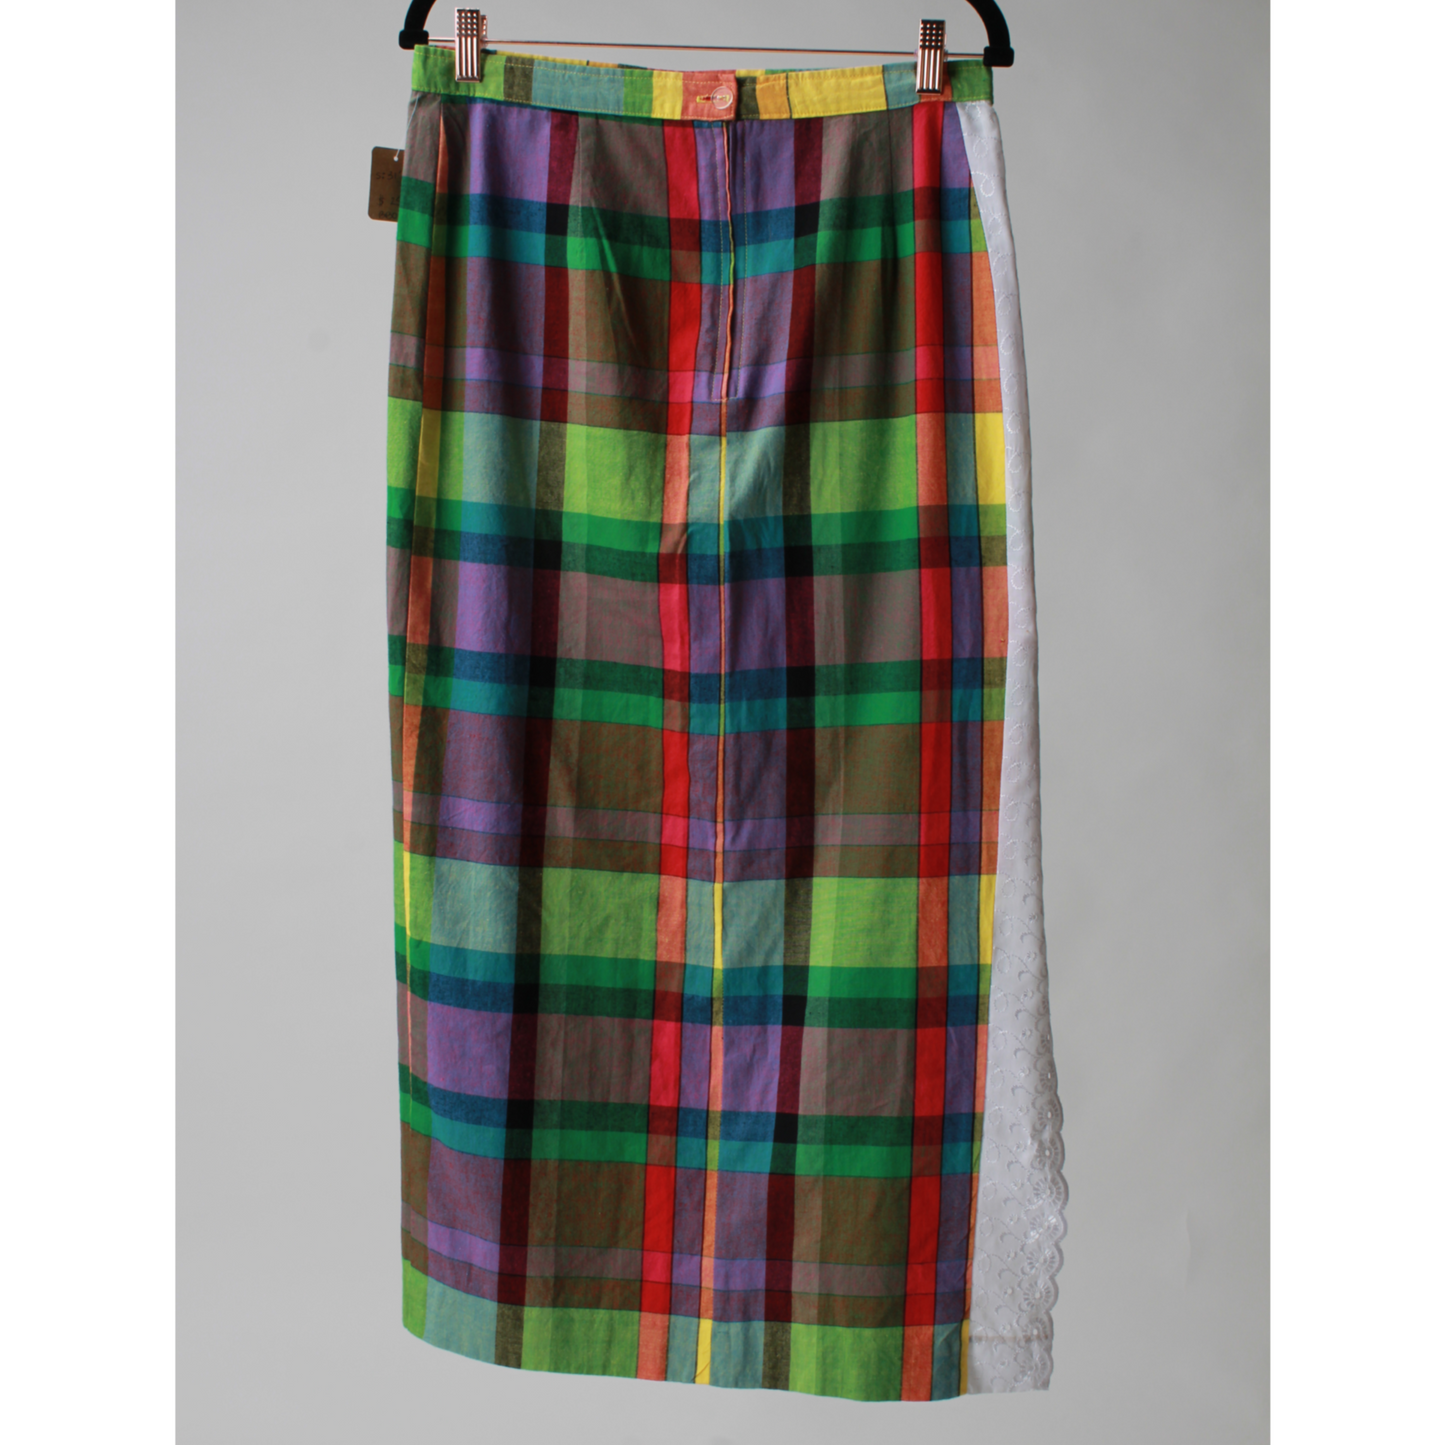 Rainbow Plaid Maxi Skirt (L)